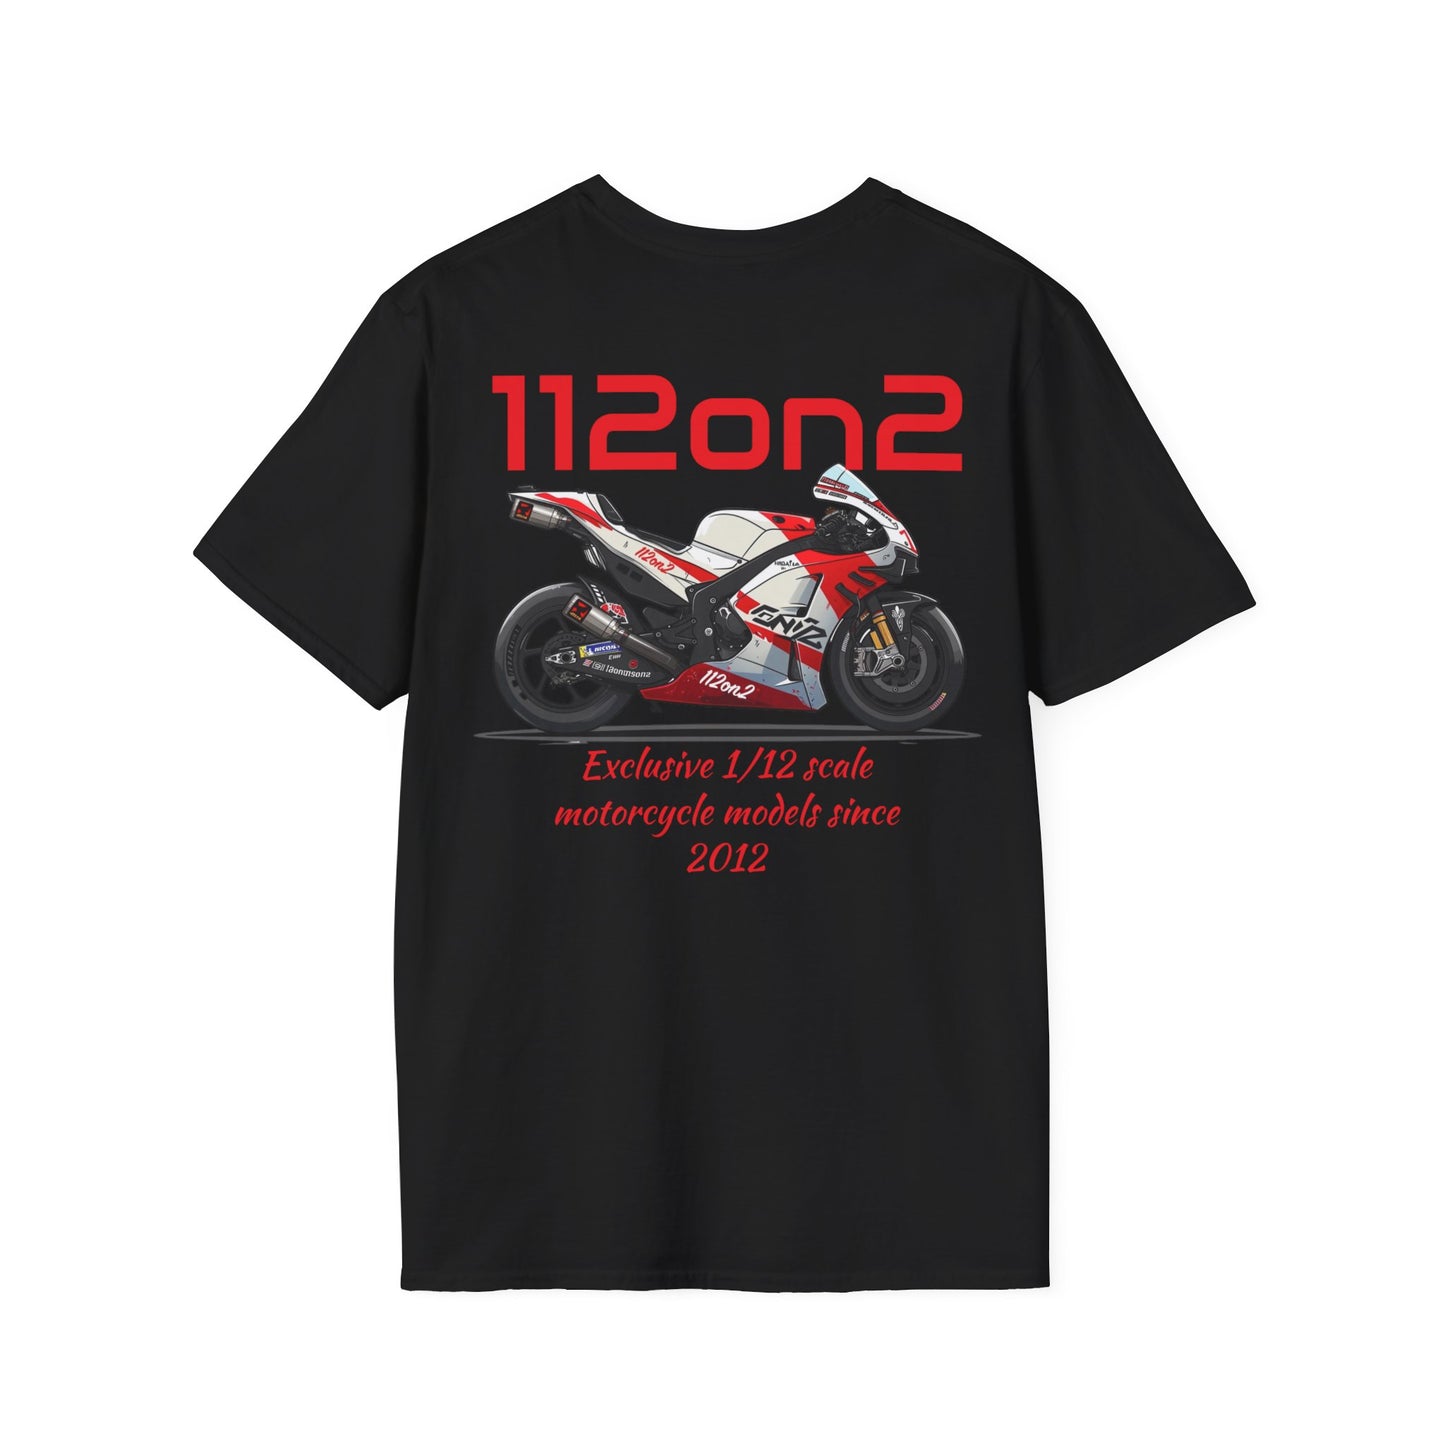 112on2 T-Shirt Cartoon Racing Motorcycle Model V1